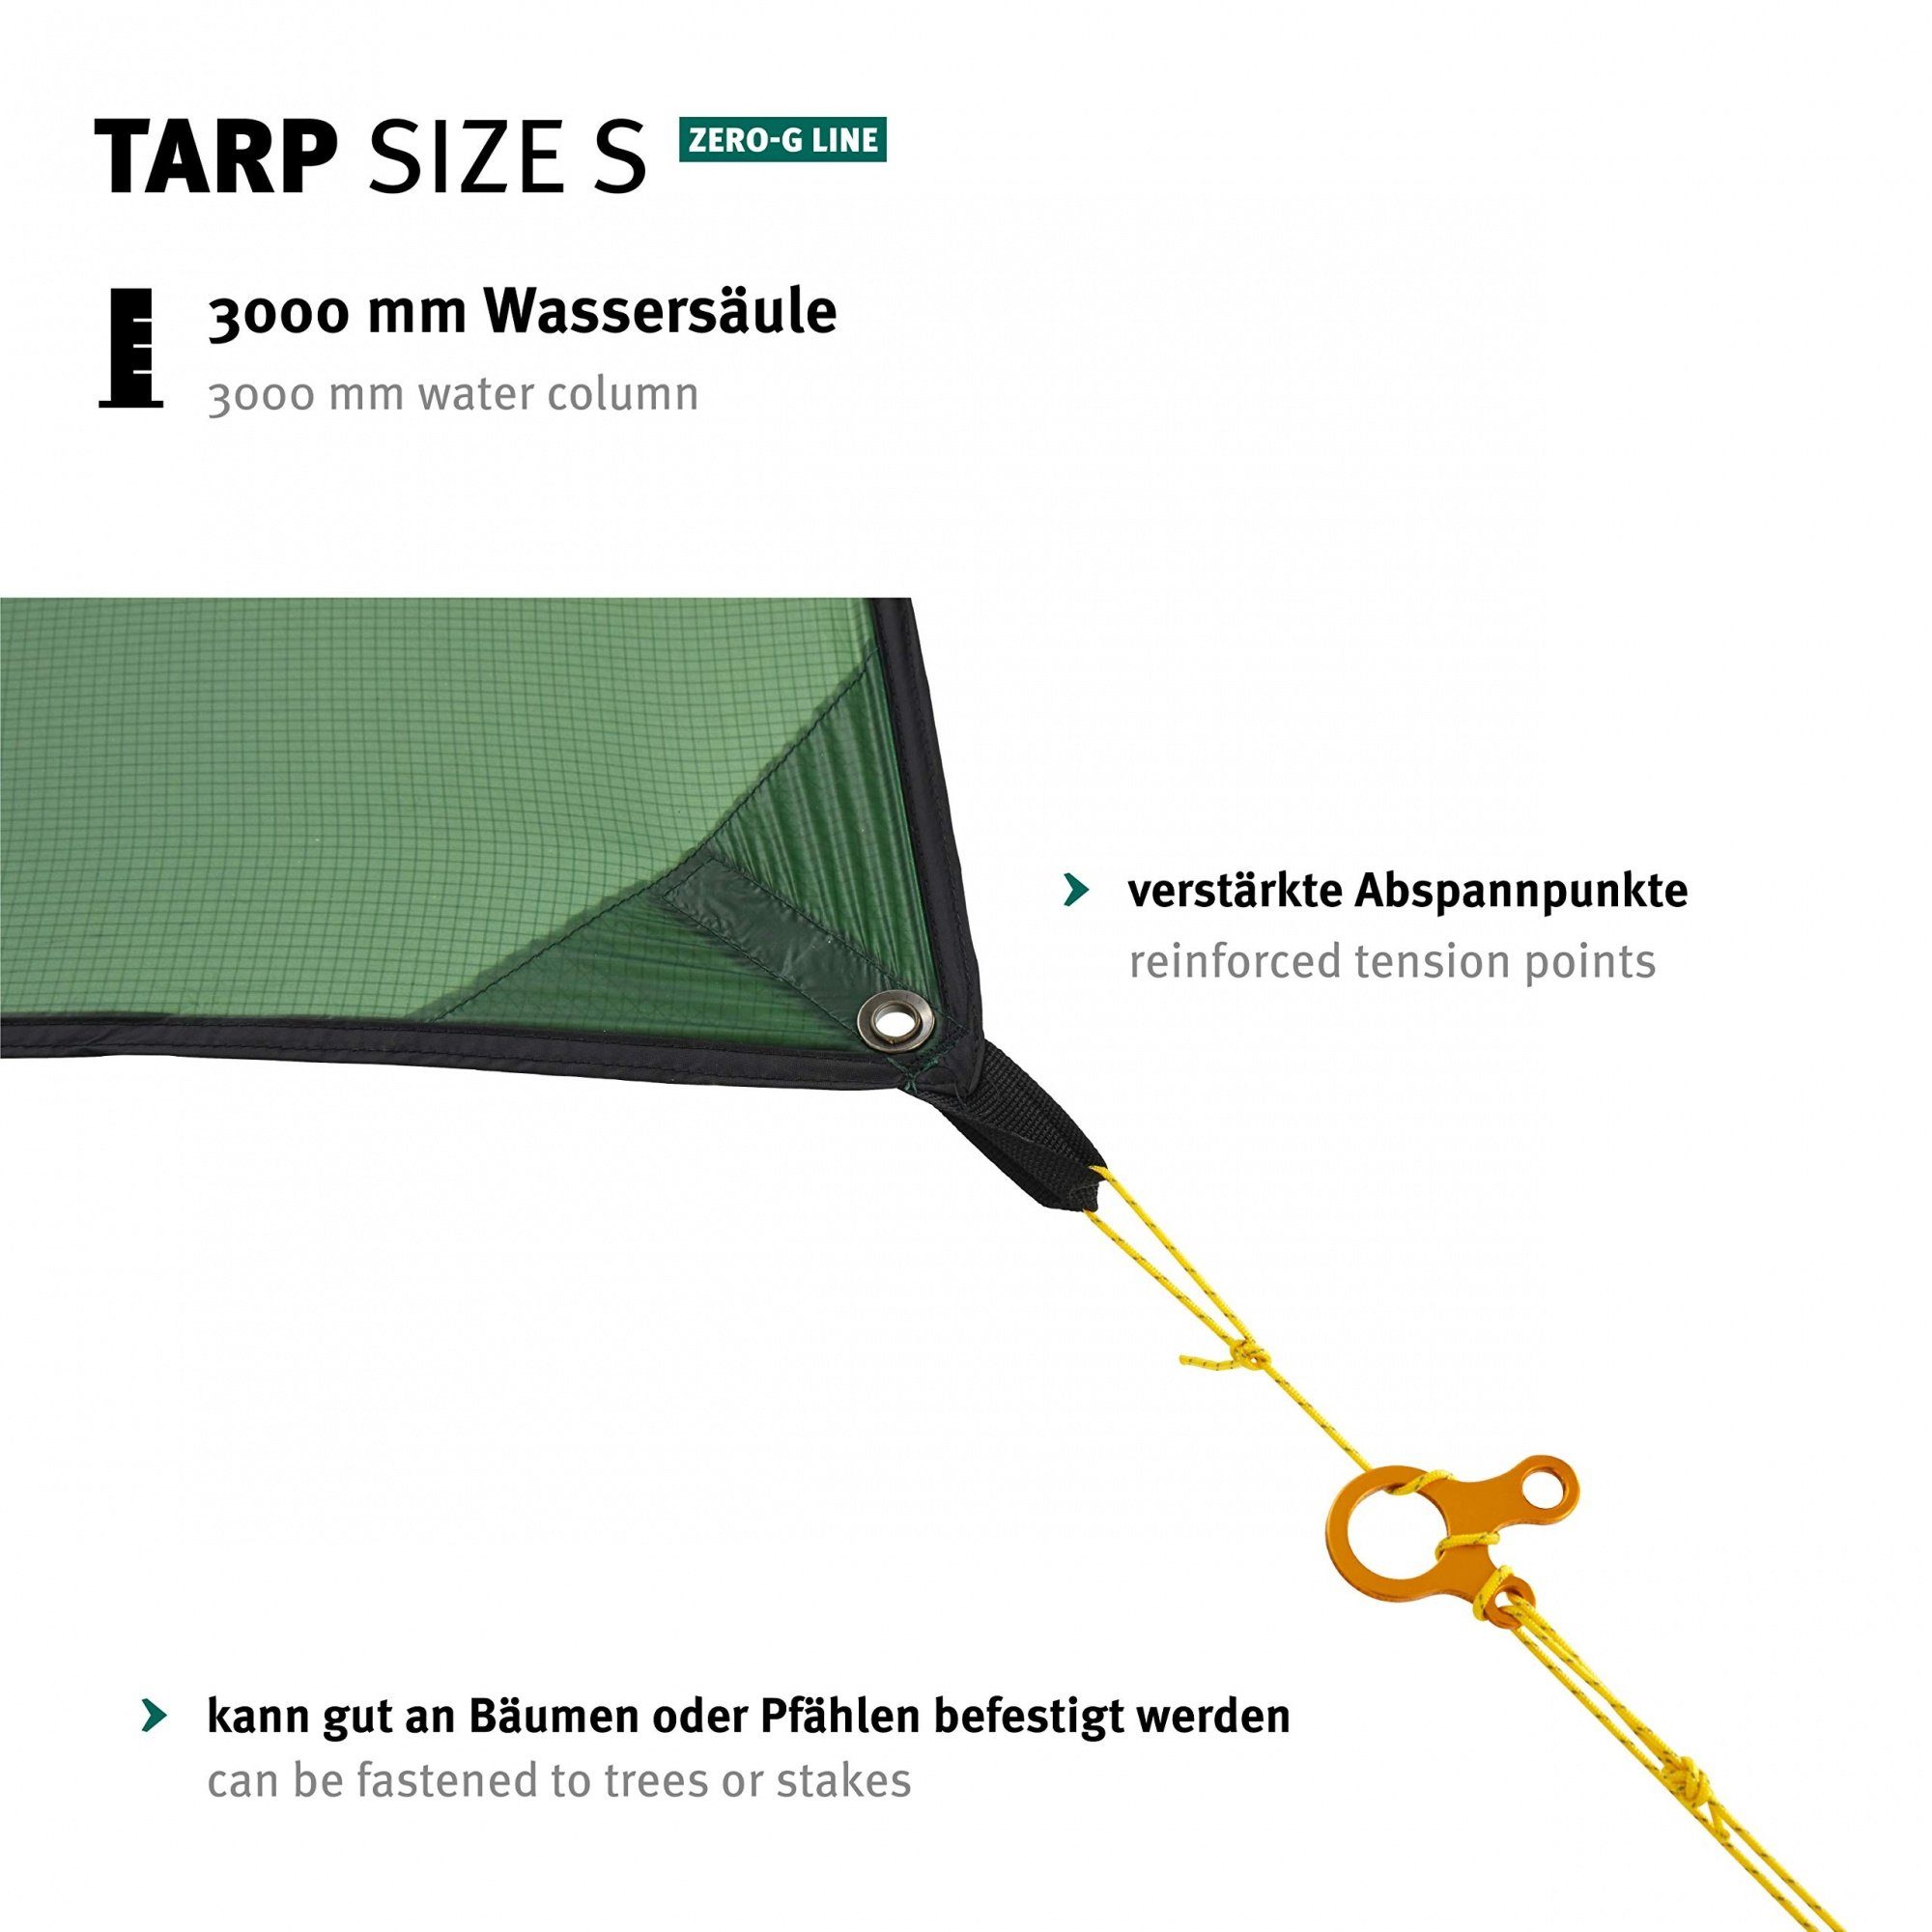 Tents Tarp-Zelt Line, cm, - S Ultraleicht 4, 290 x Wechsel Tarp Personen: Zeltdach, 400 Zero-G Grün